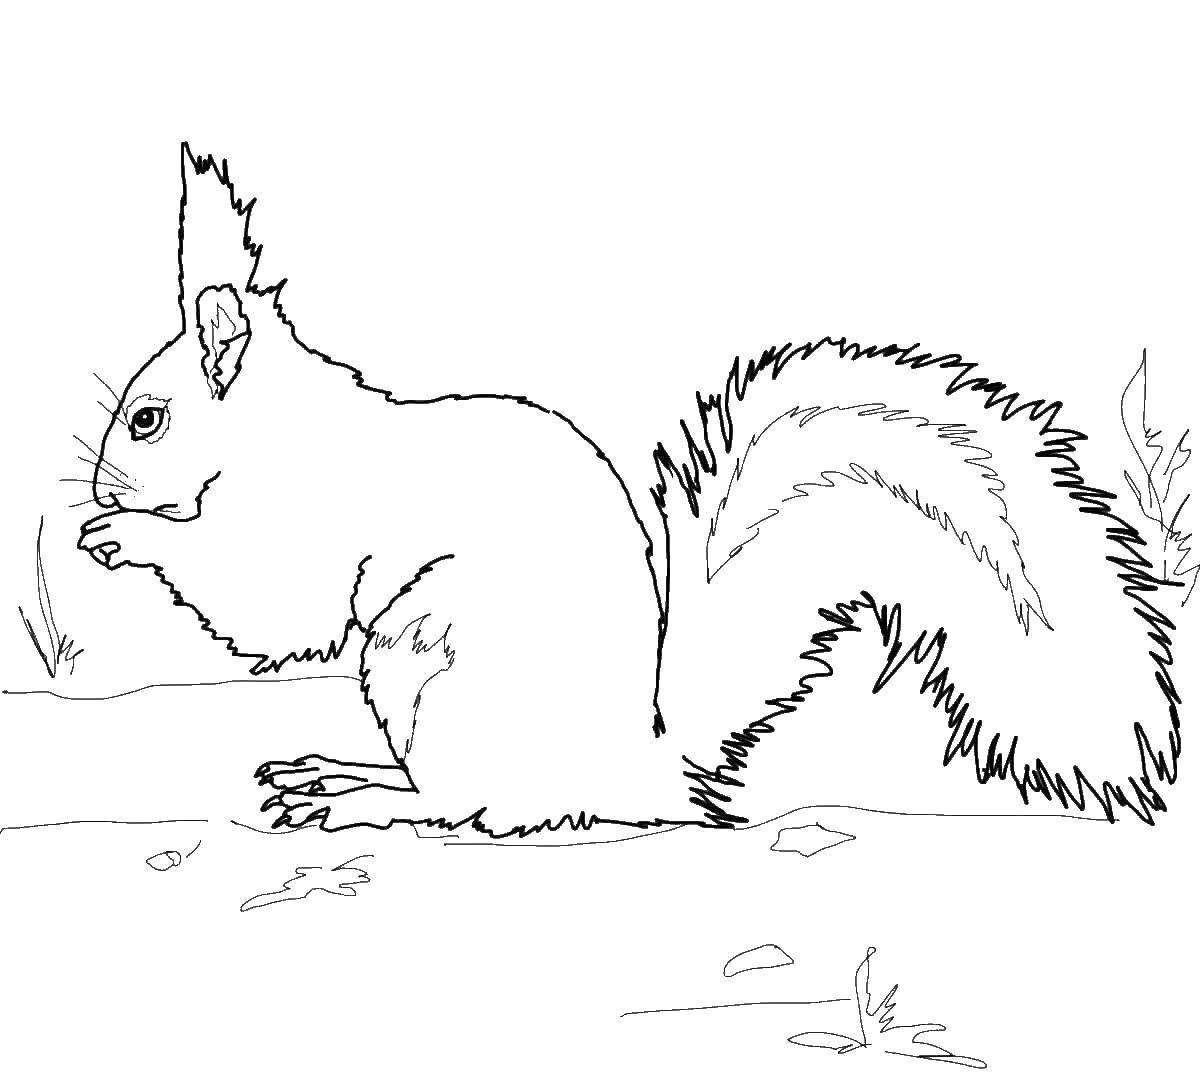 Coloring Squirrel. Category Animals. Tags:  animals, squirrel, acorn.